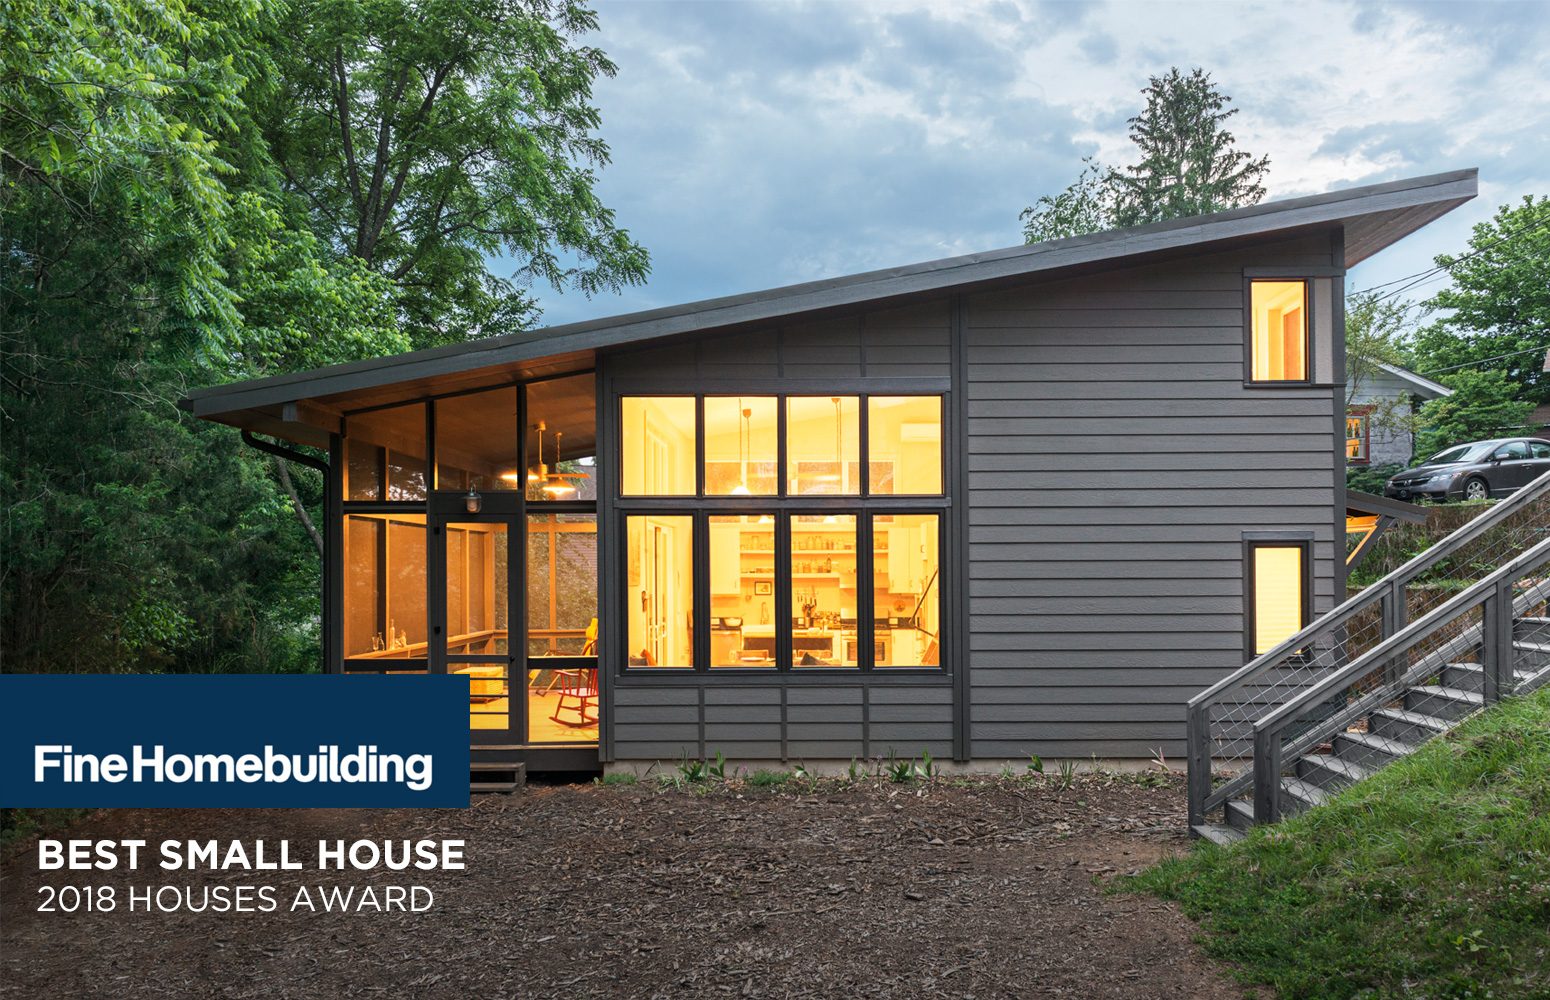 West Asheville Project wins Fine Homebuilding Award